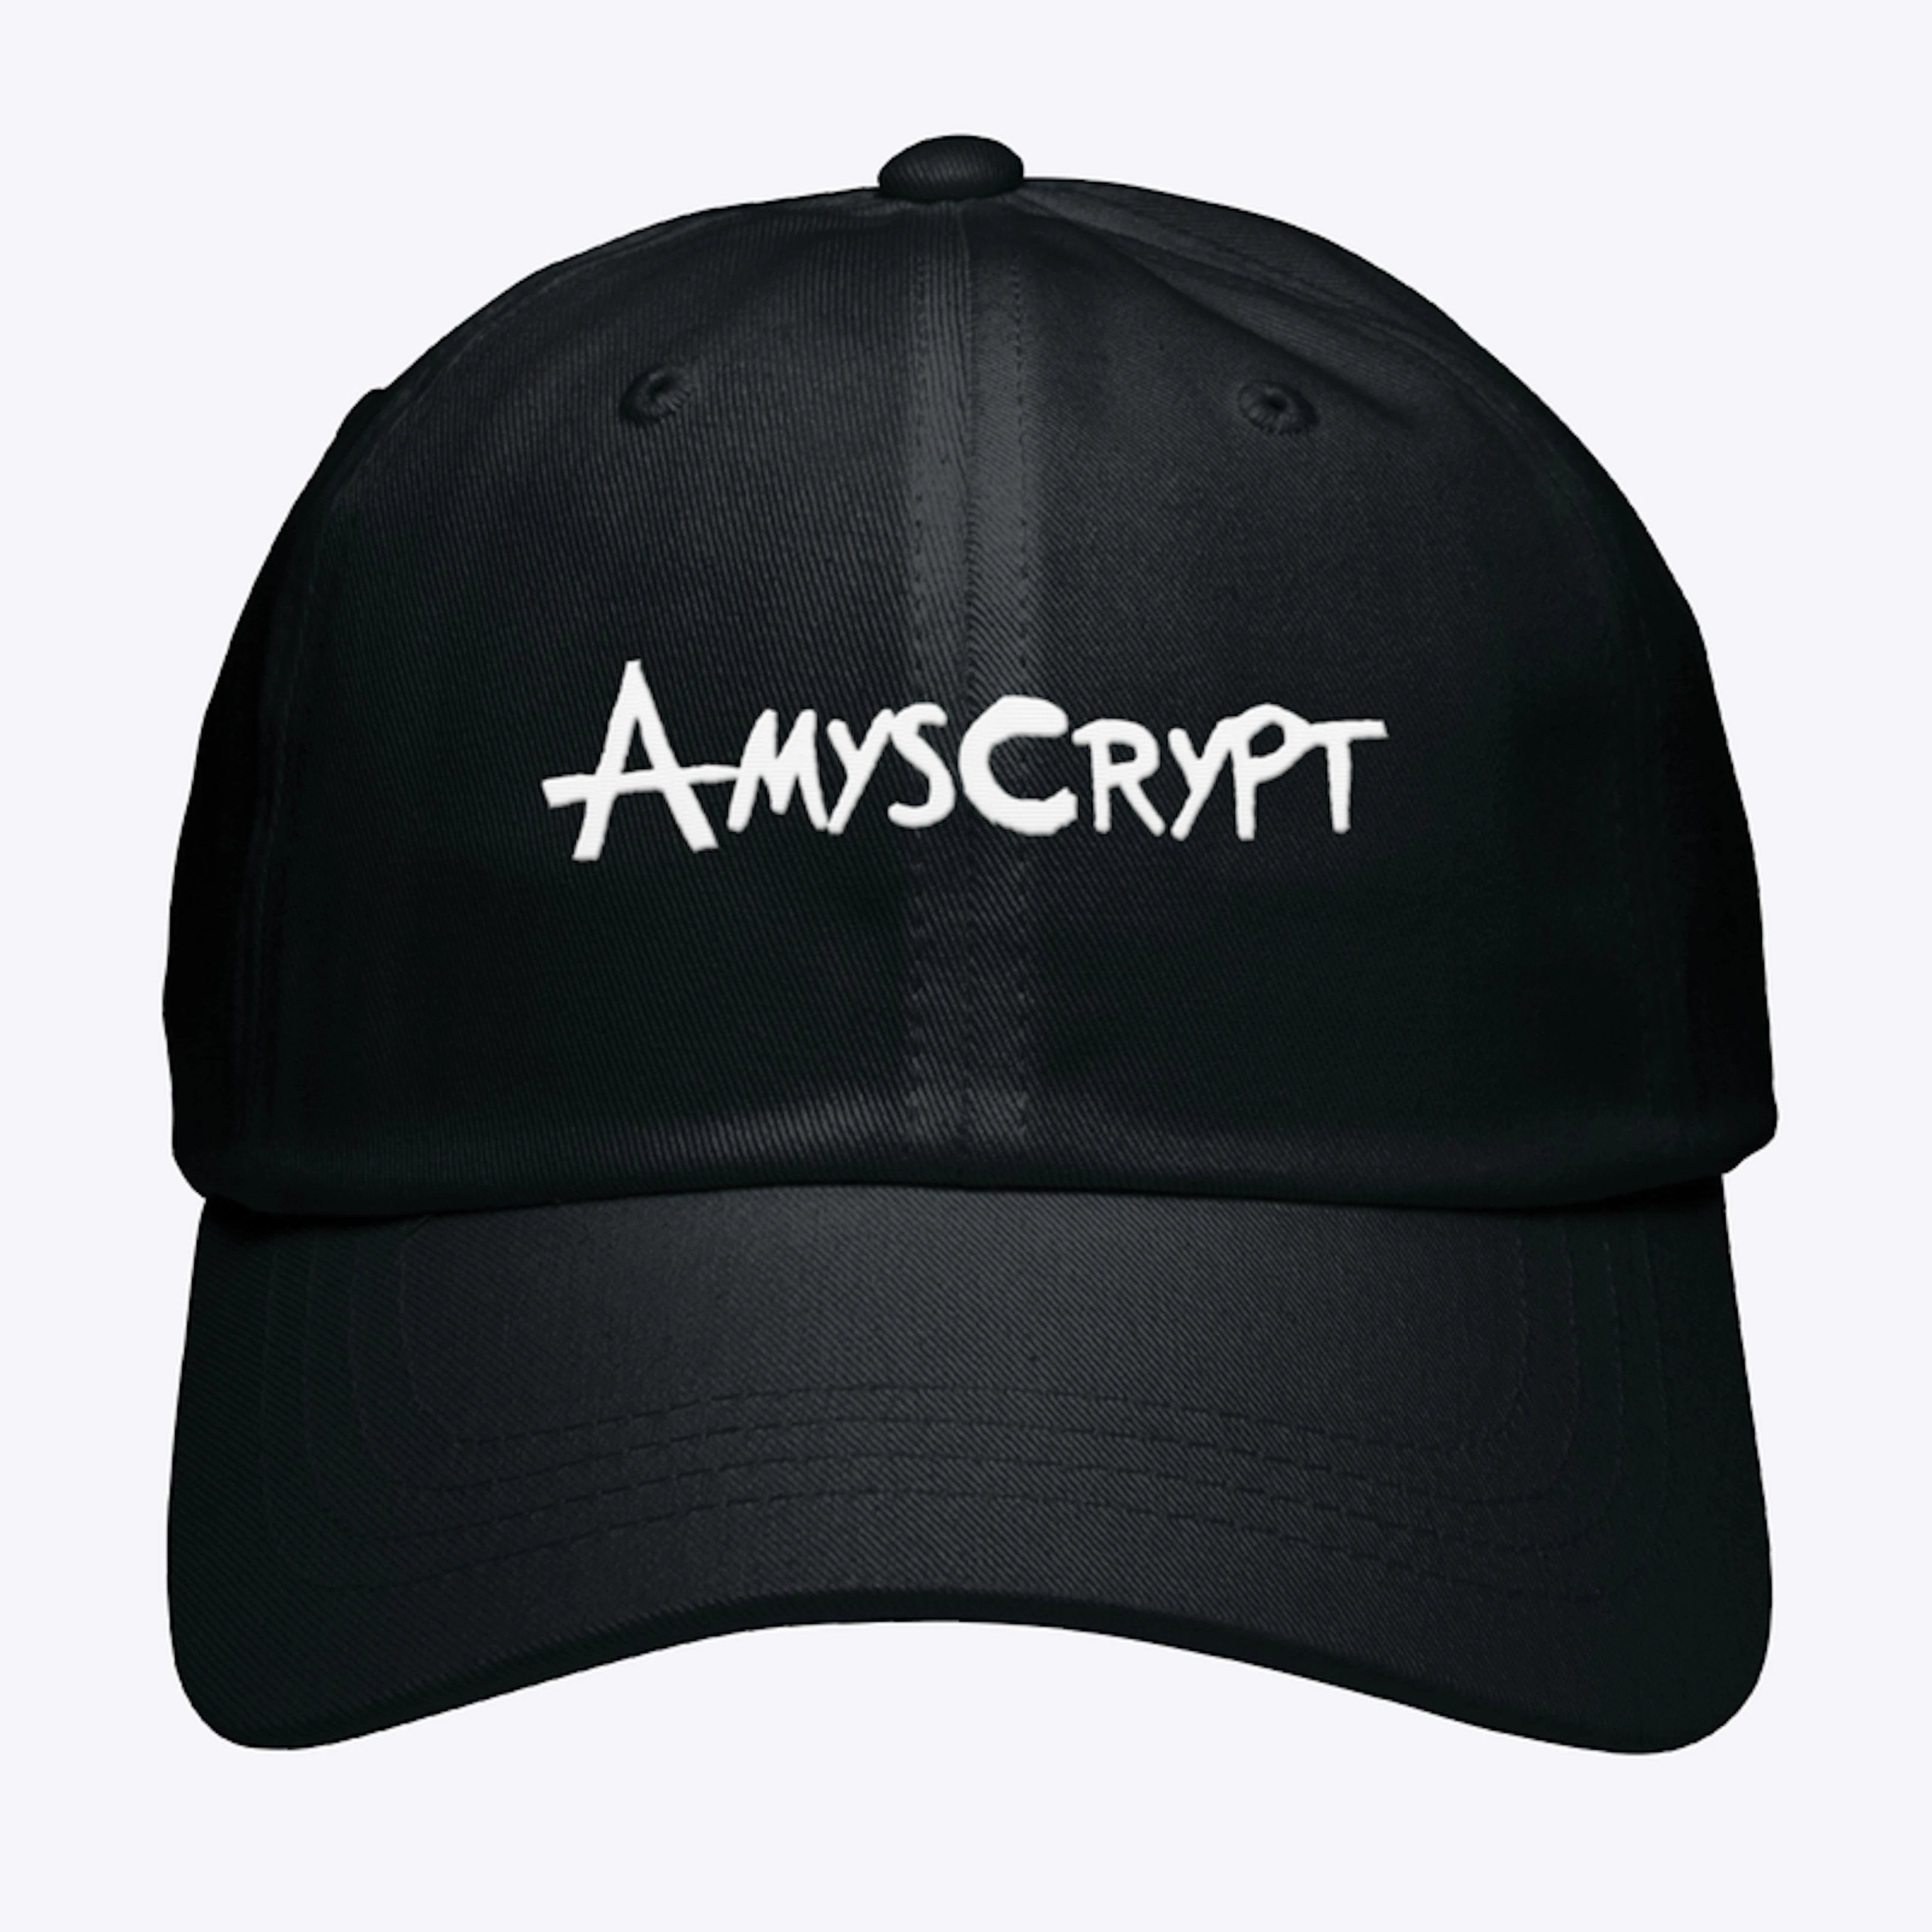 Amy's Crypt Cap